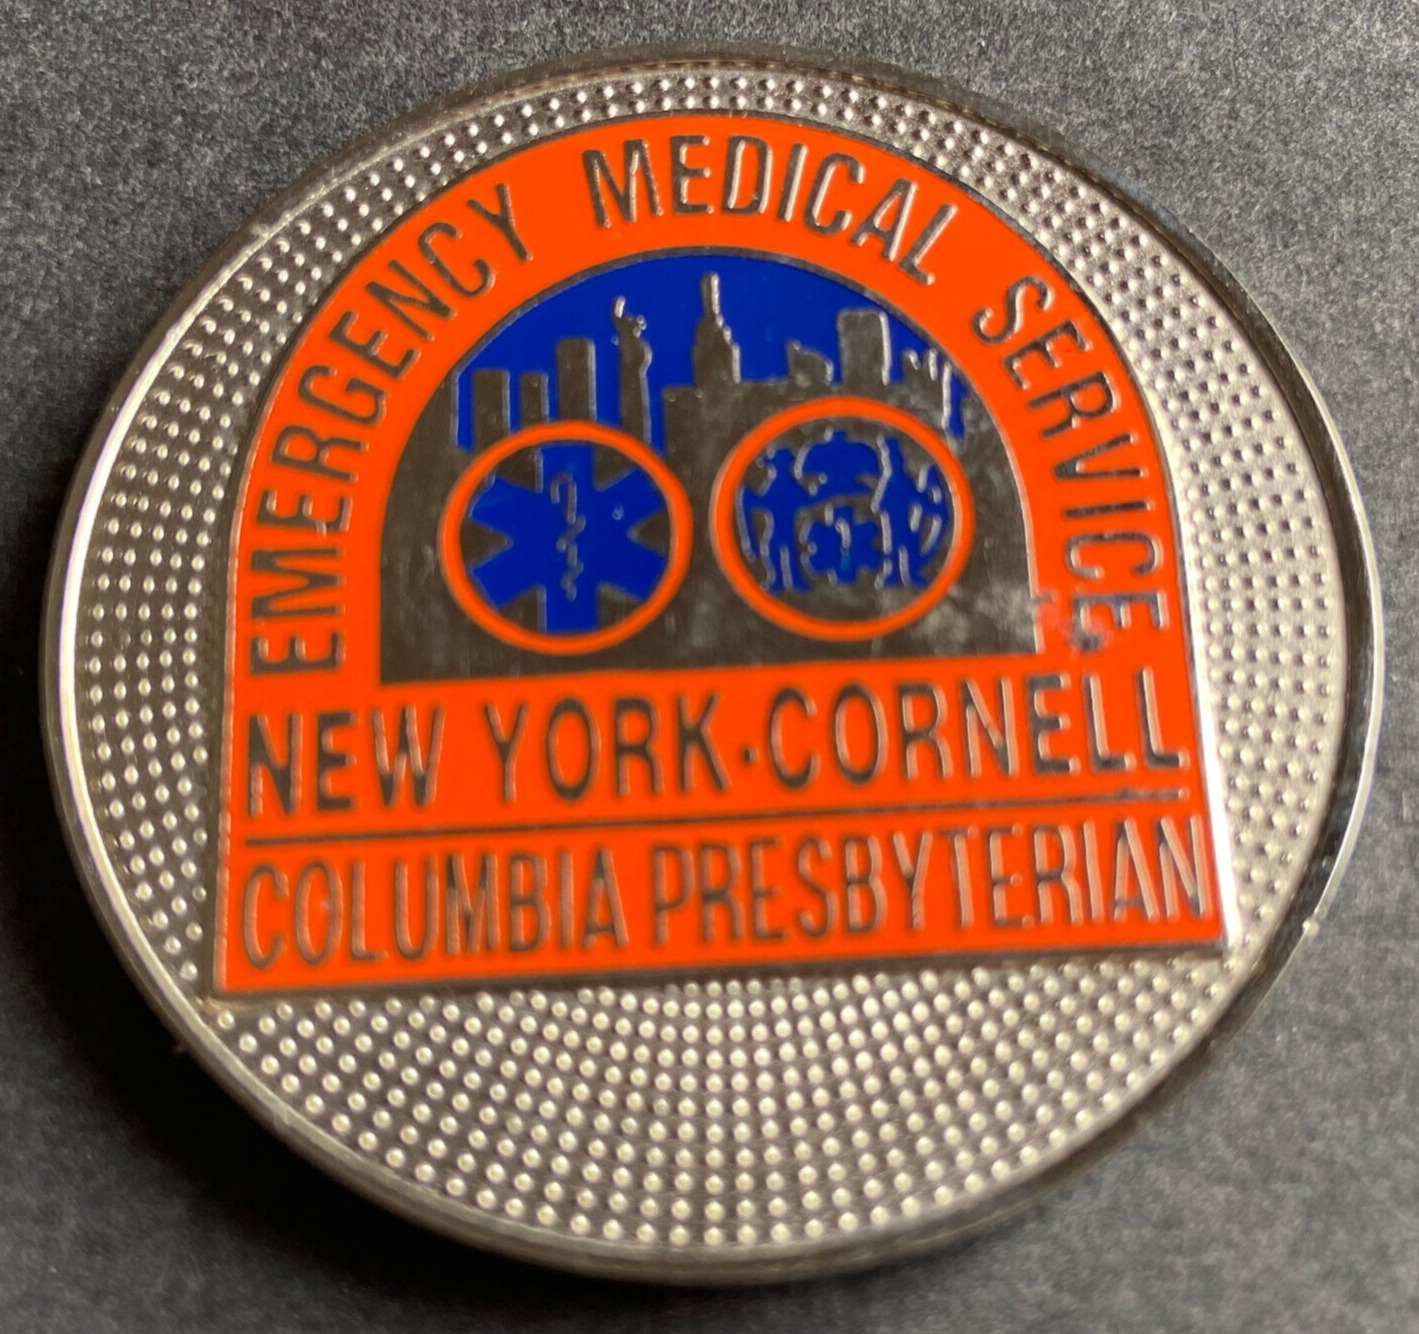 New York Cornell Columbia Presbyterian Emergency Medical Service Challenge Coin